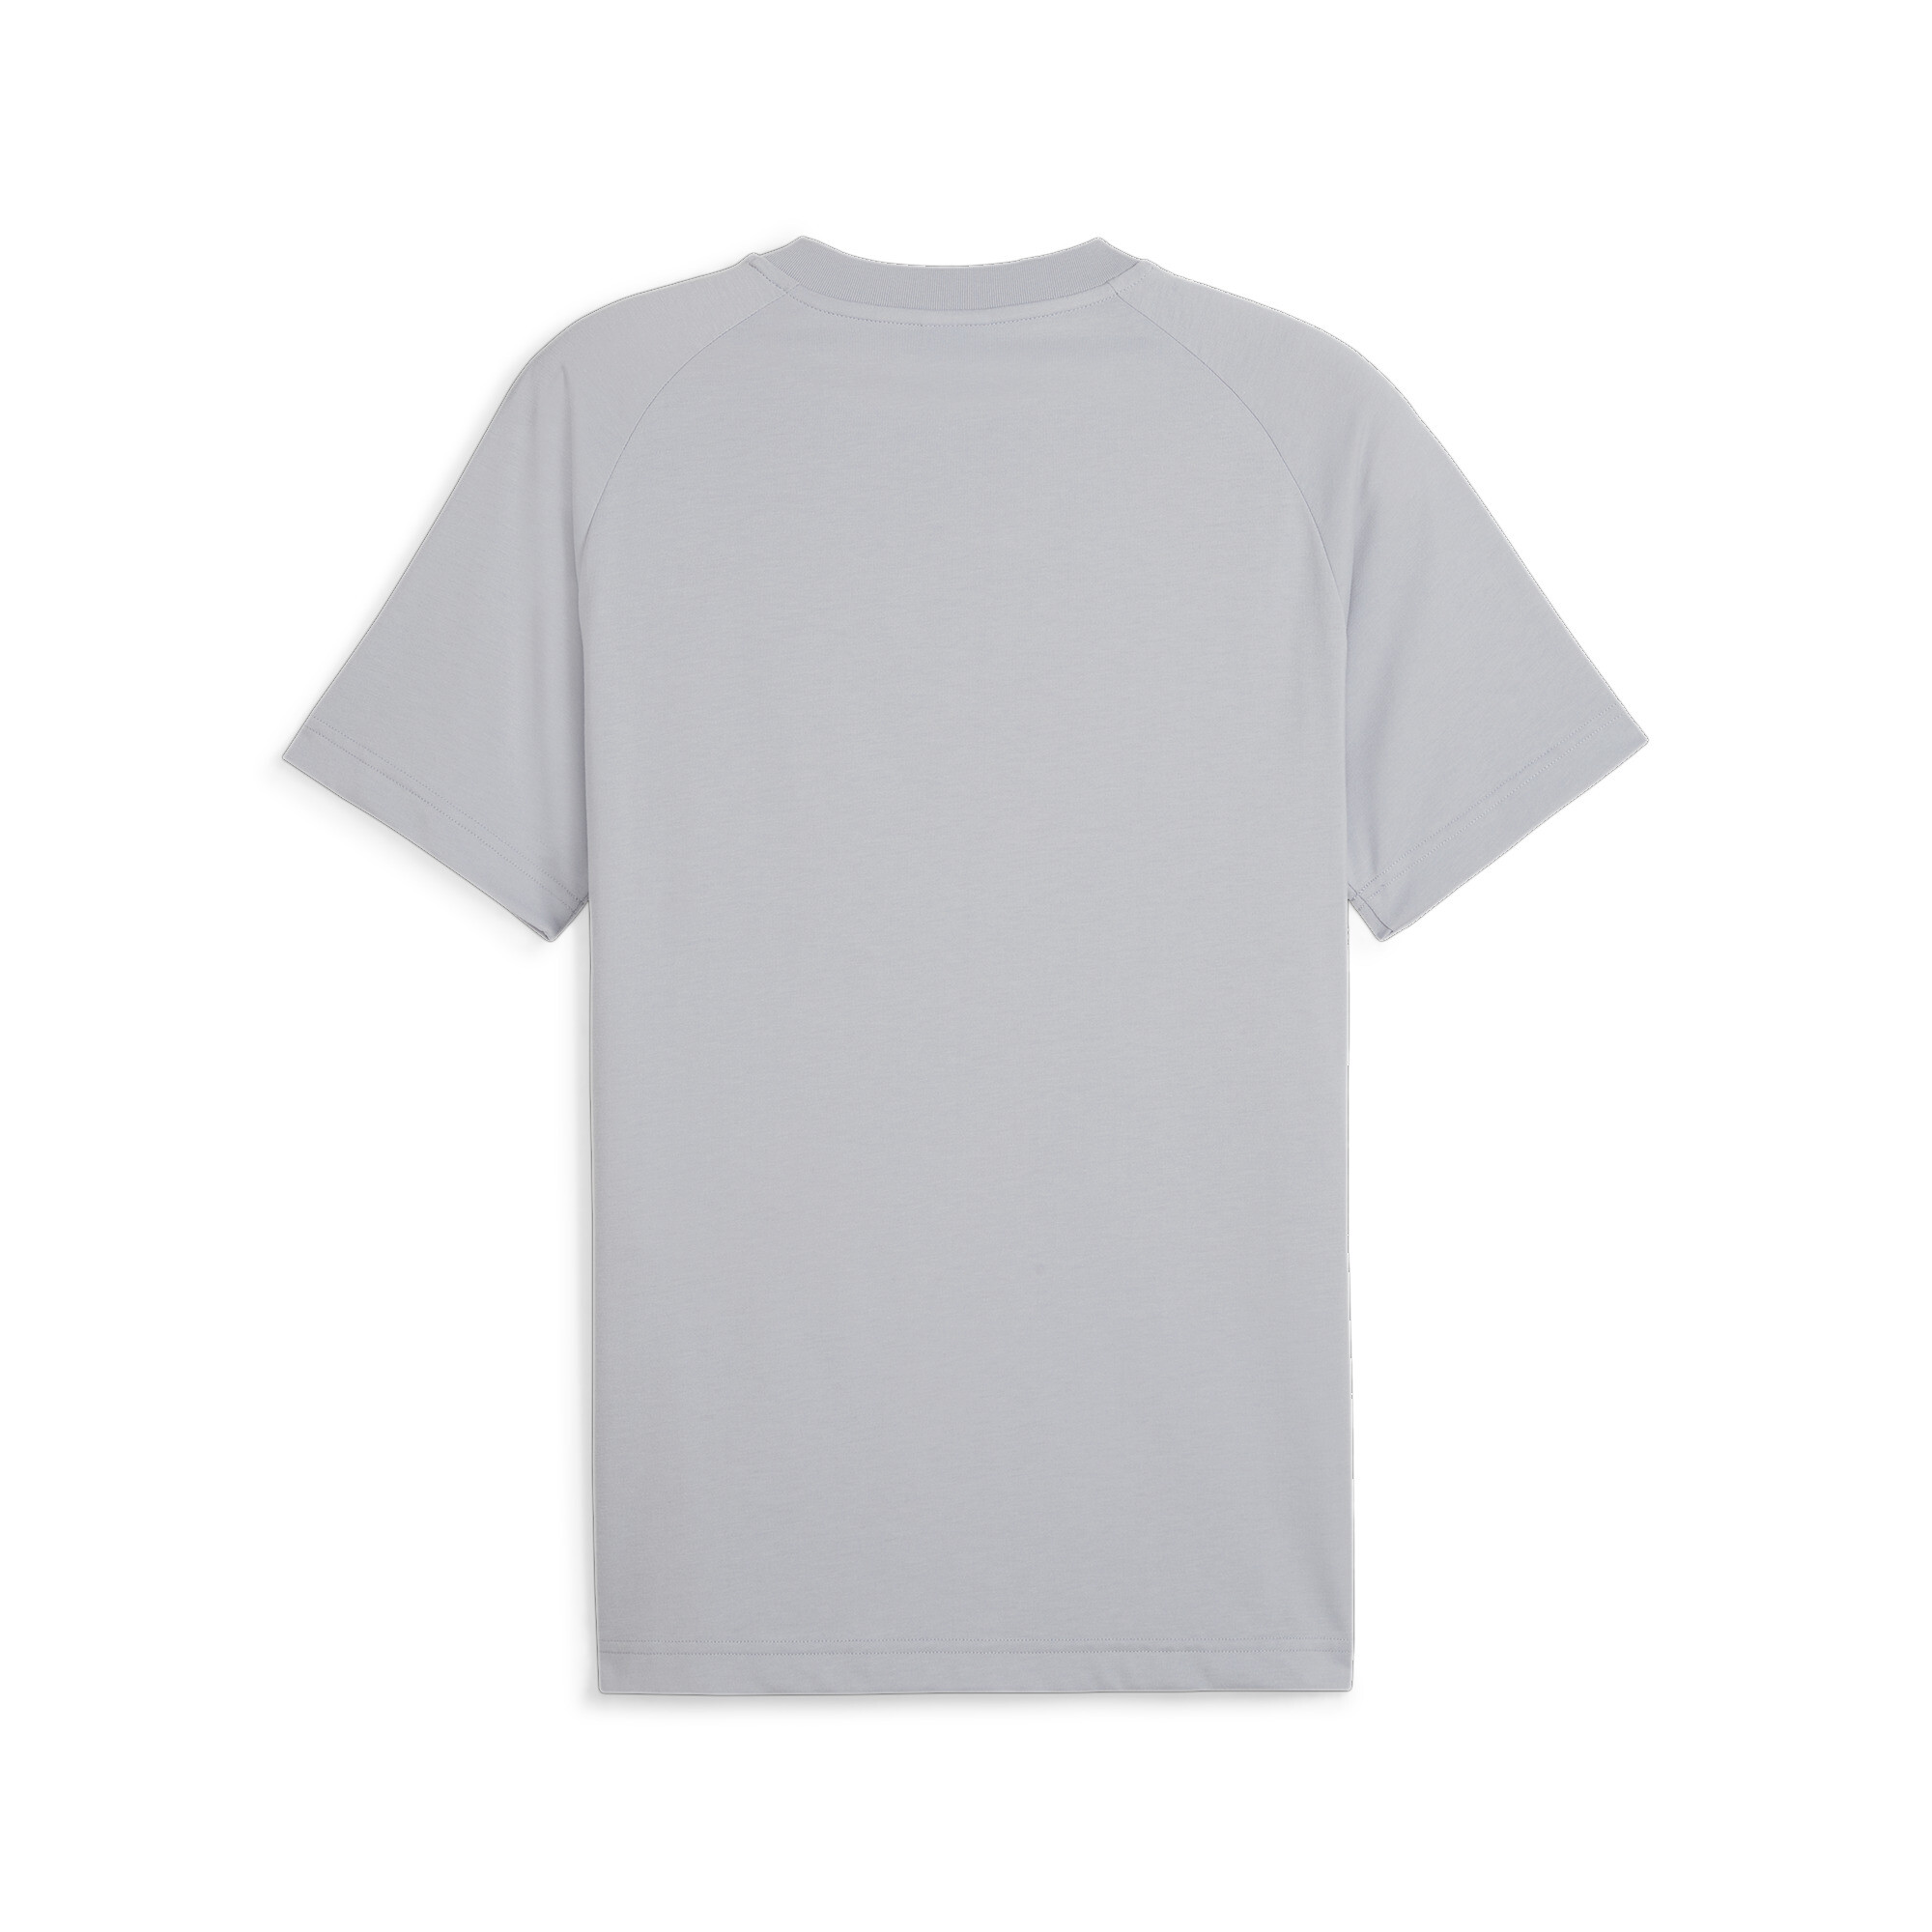 Men's PUMATECH Pocket T-Shirt In Gray, Size 2XL